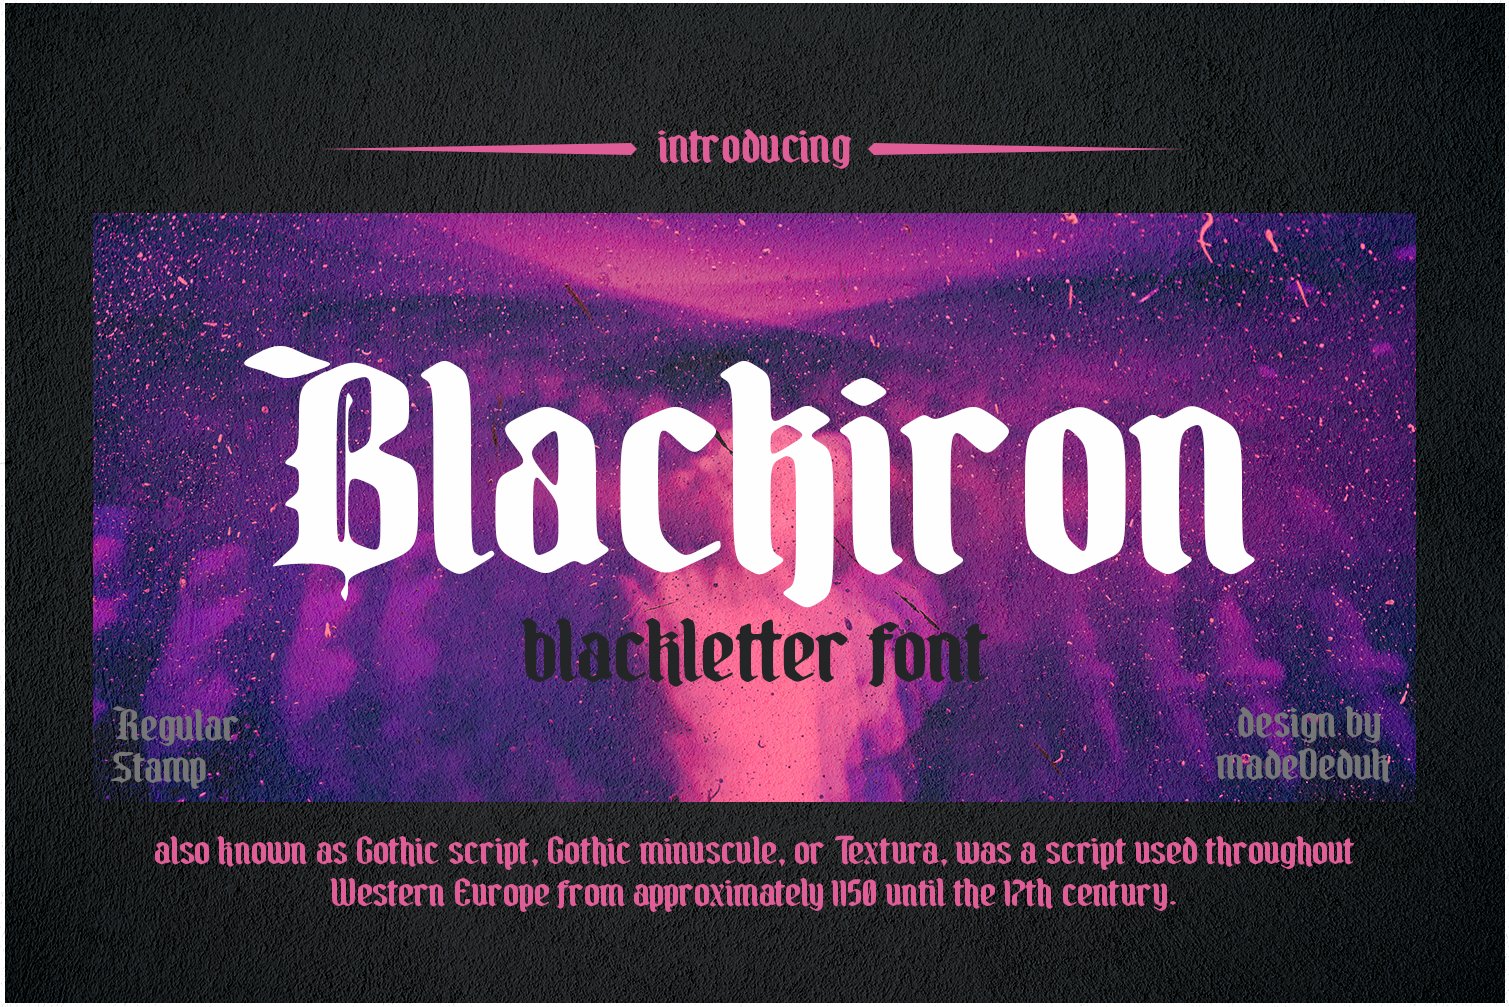 Blackiron - Blackletter Font cover image.